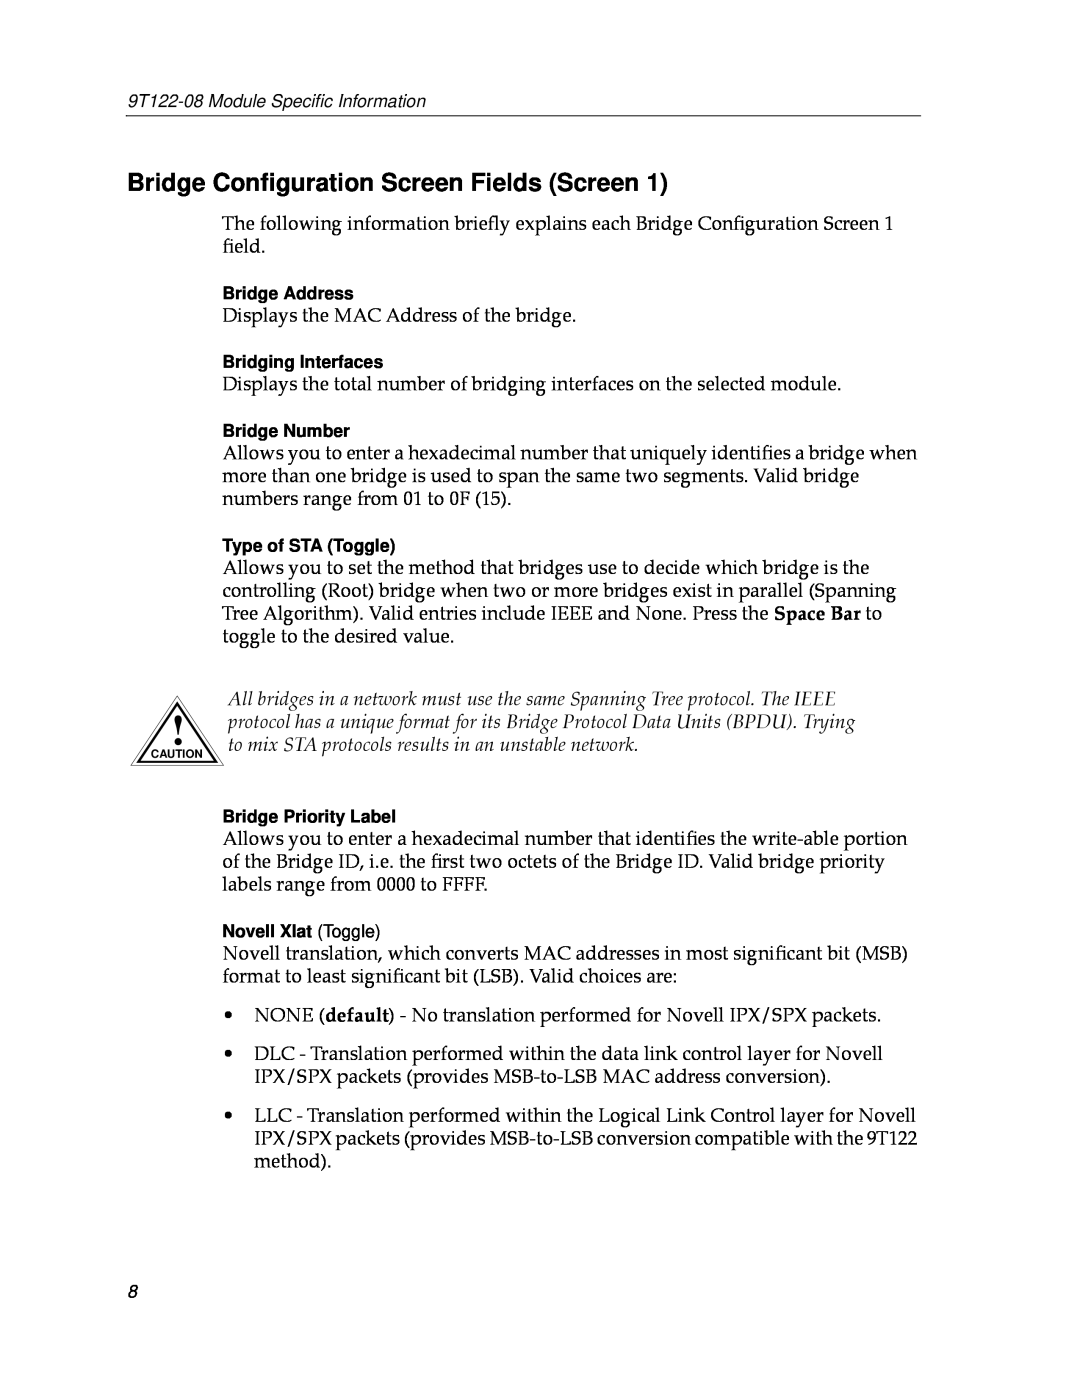 Cabletron Systems 9T122-08 appendix Bridge Conﬁguration Screen Fields Screen 